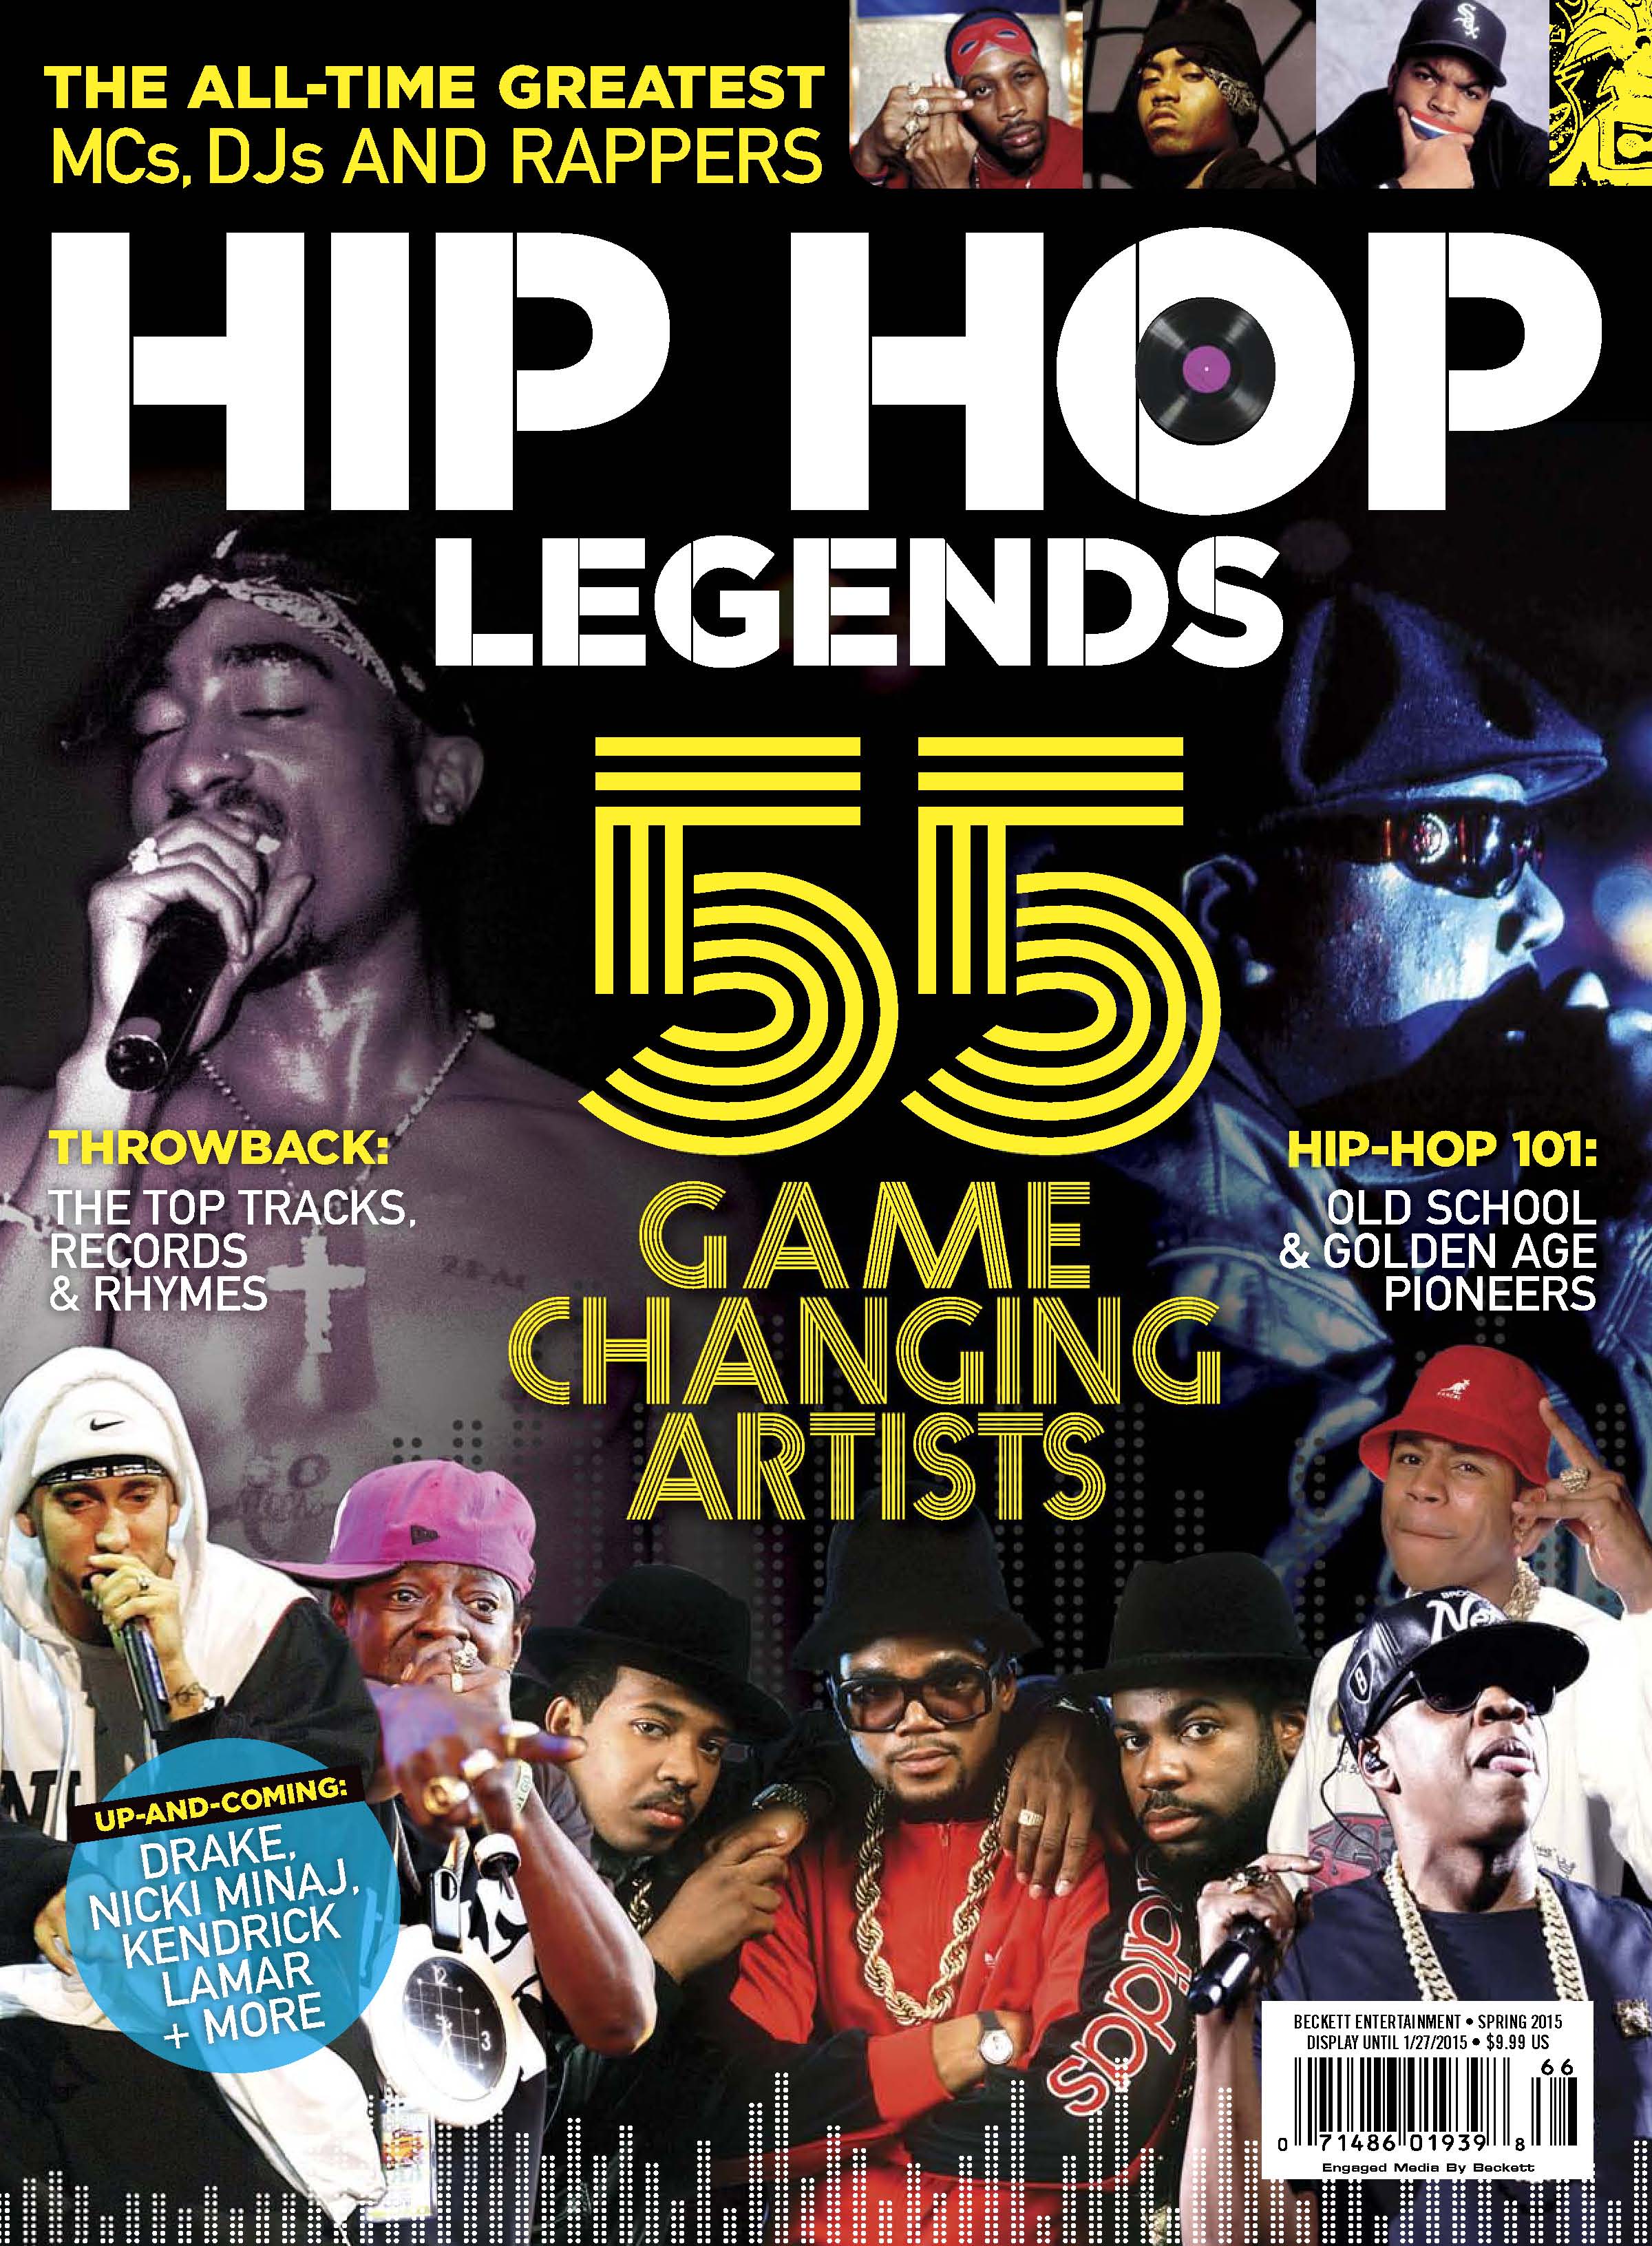 50 Greatest Hip Hop Groups Spring 2015